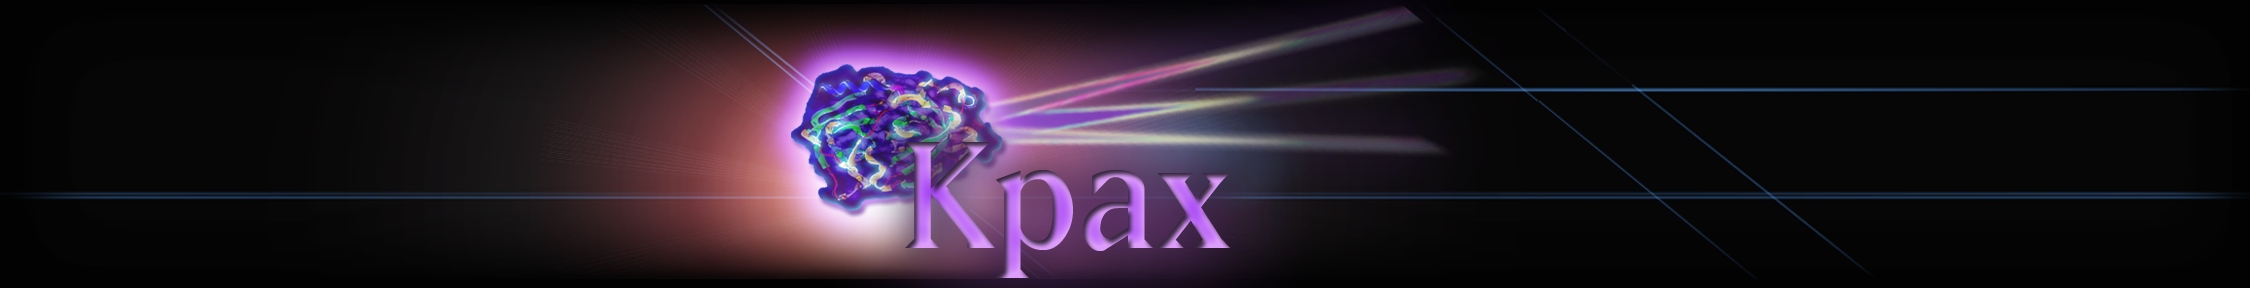 Kpax logo